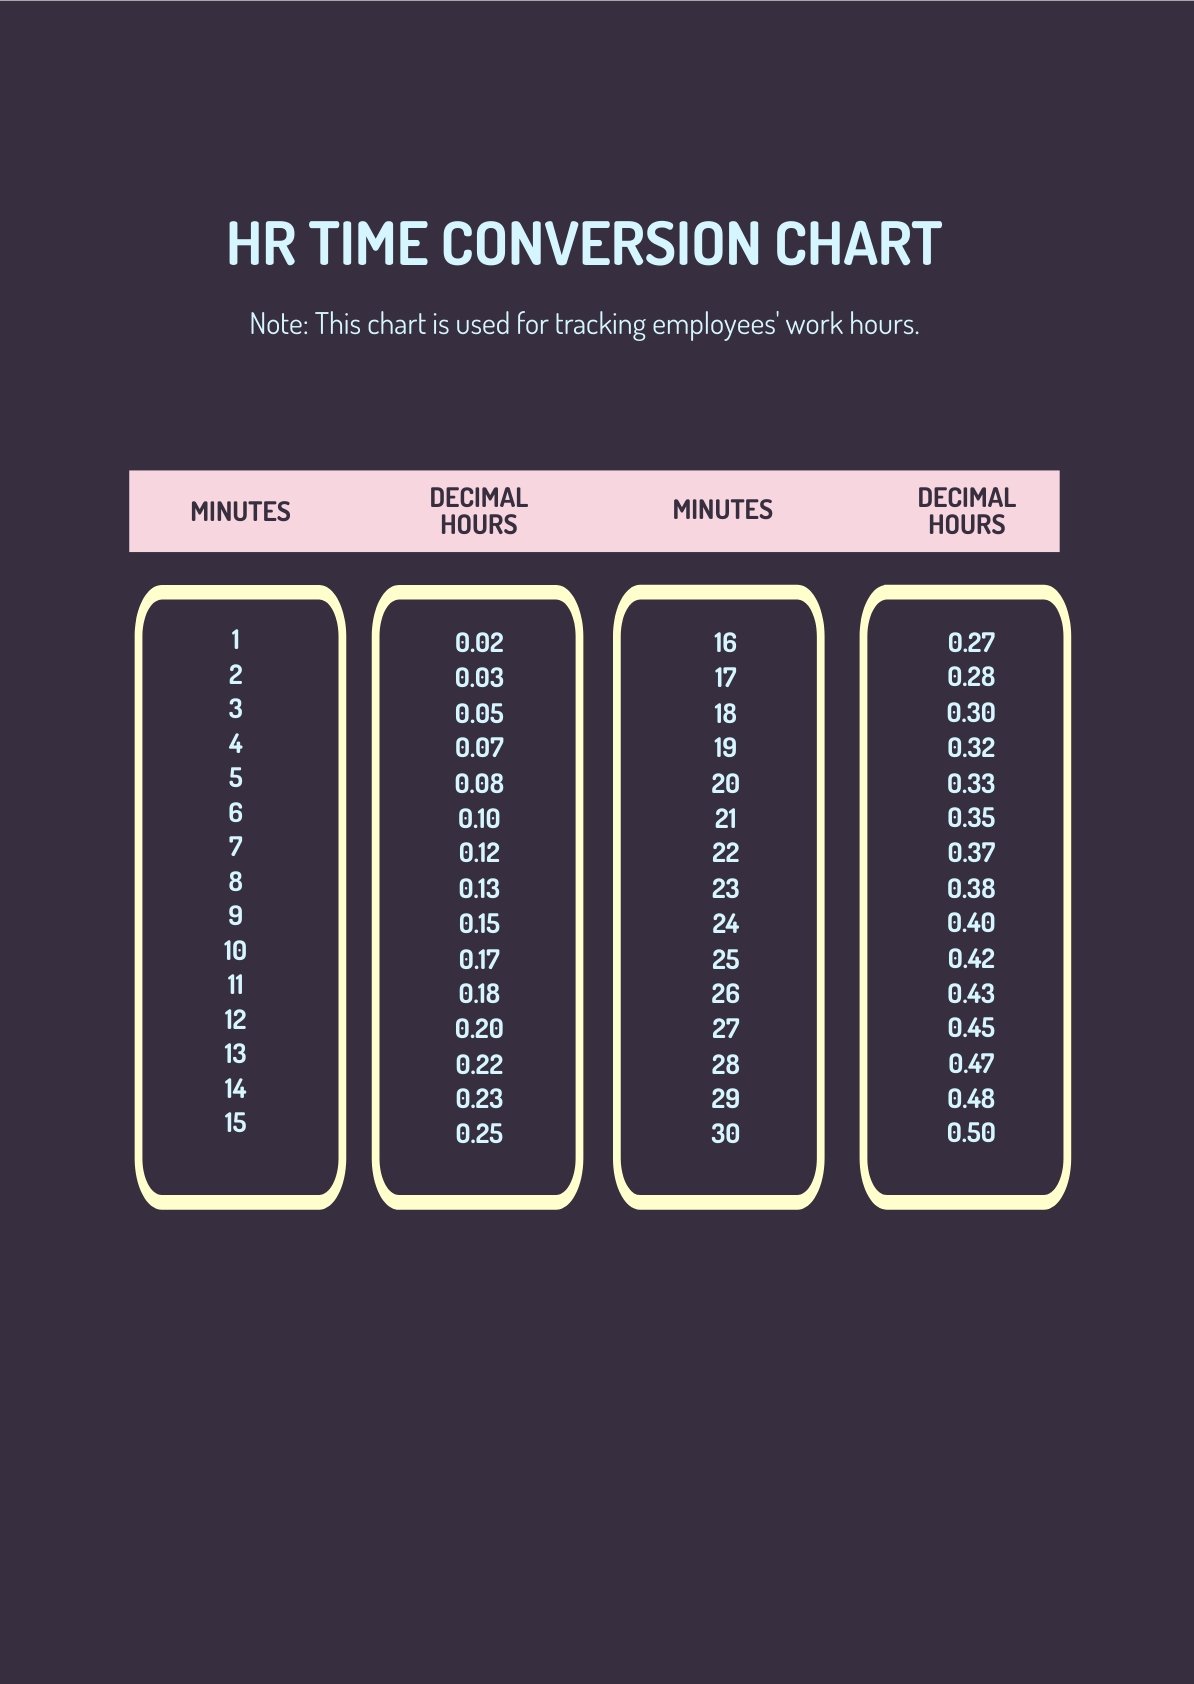 HR Time Conversion Chart